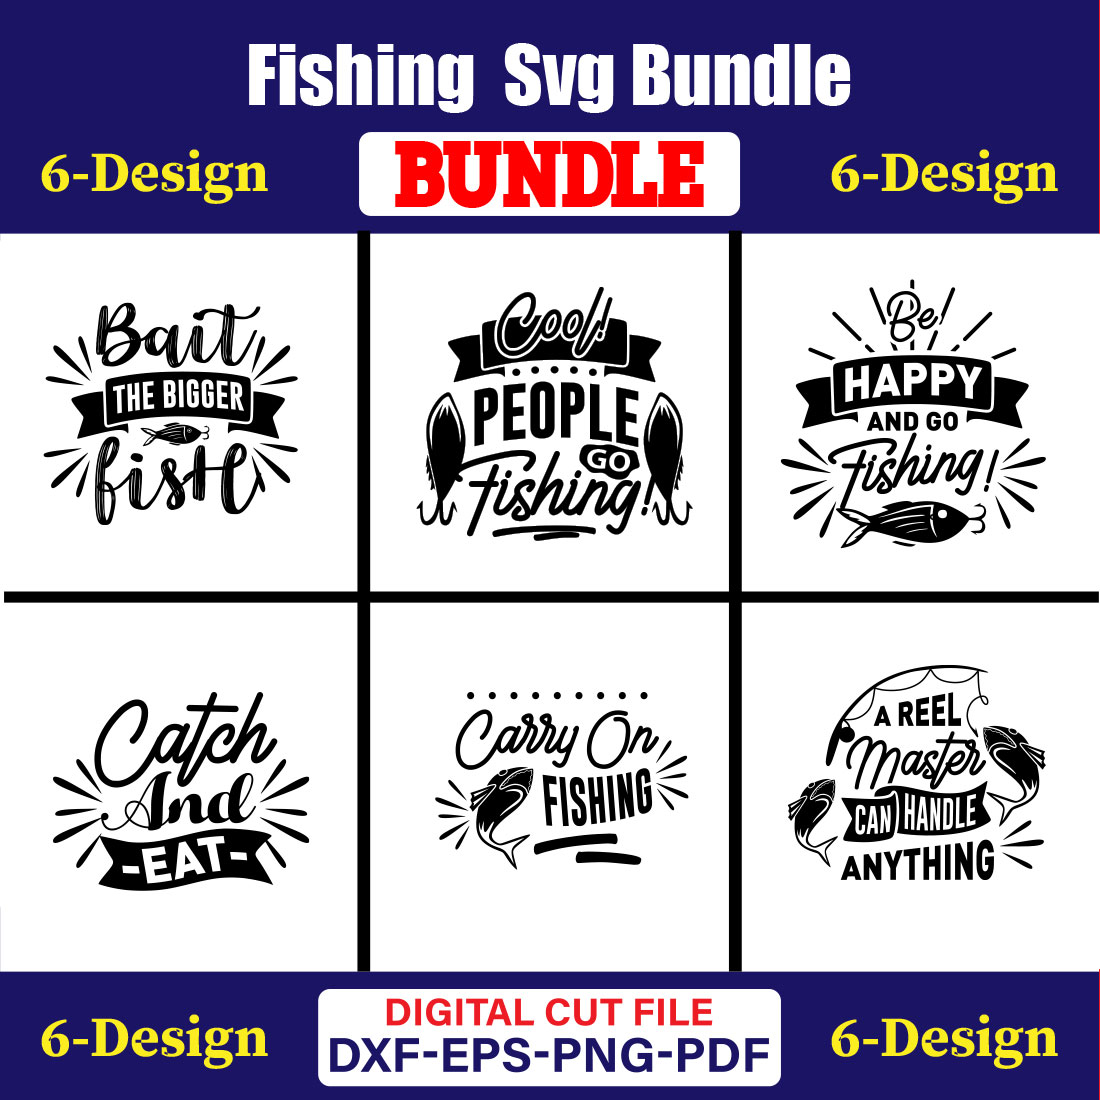 Fishing T-shirt Design Bundle Vol-14 cover image.